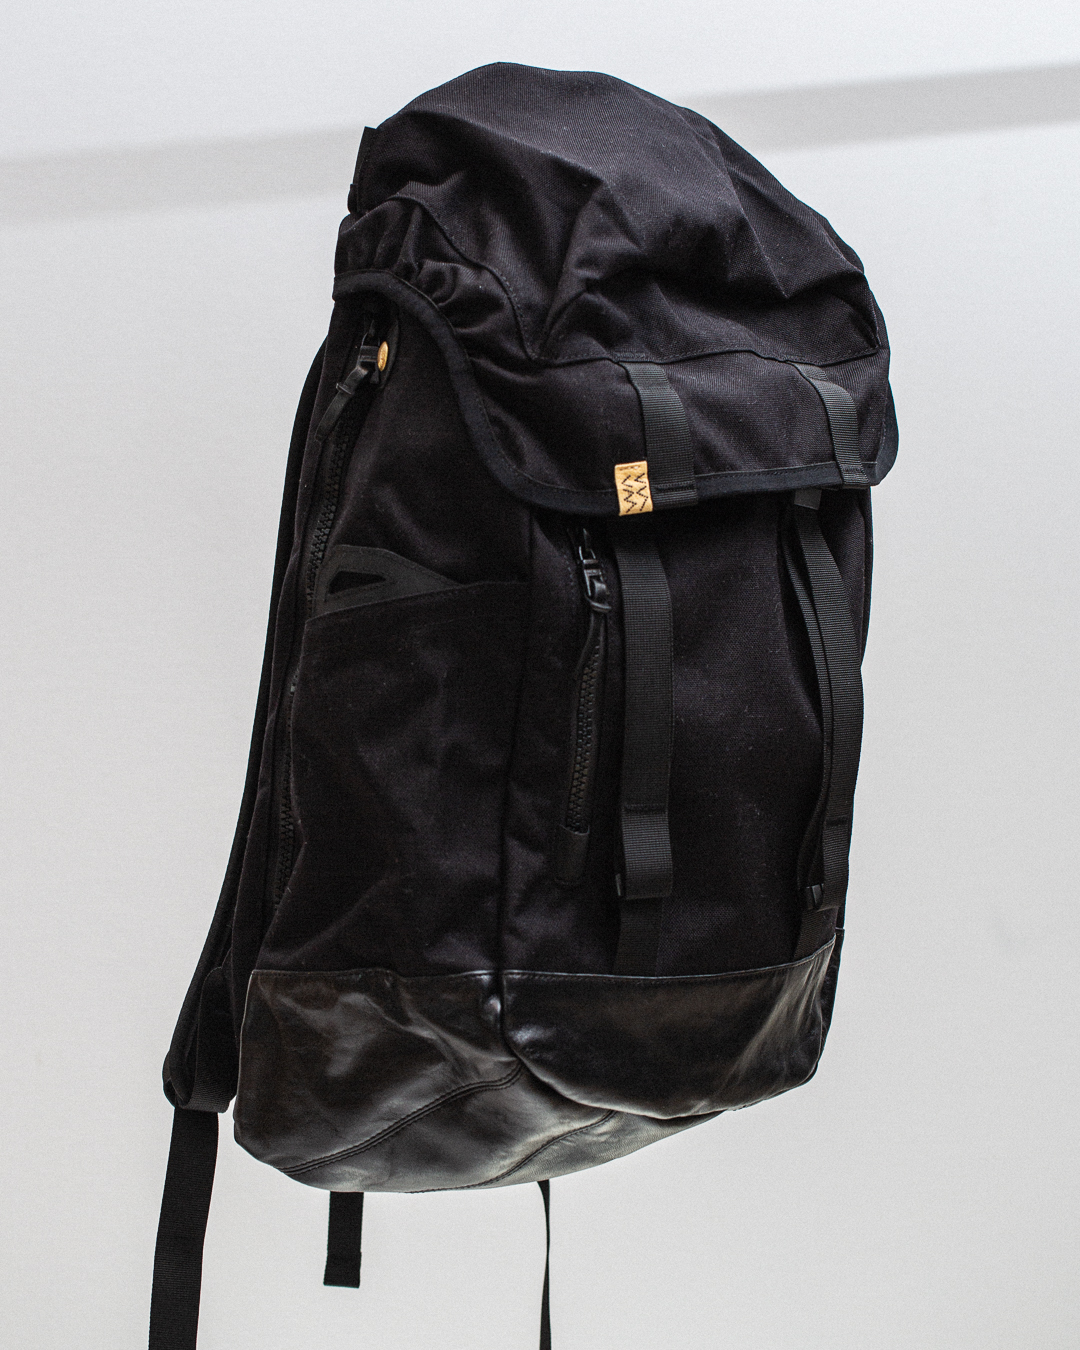 Norse Store | Shipping Worldwide - Visvim Cordura 25L Backpack - Black